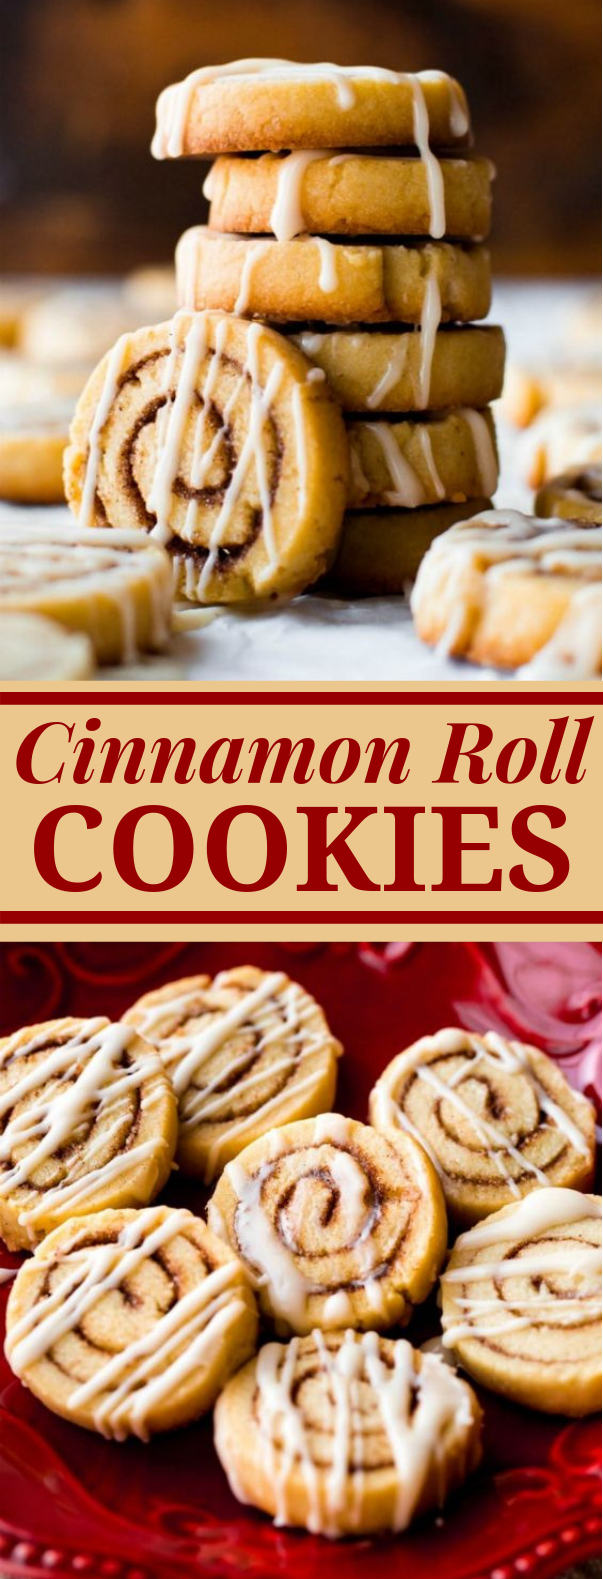 Cinnamon Roll Cookies #dessert #christmas